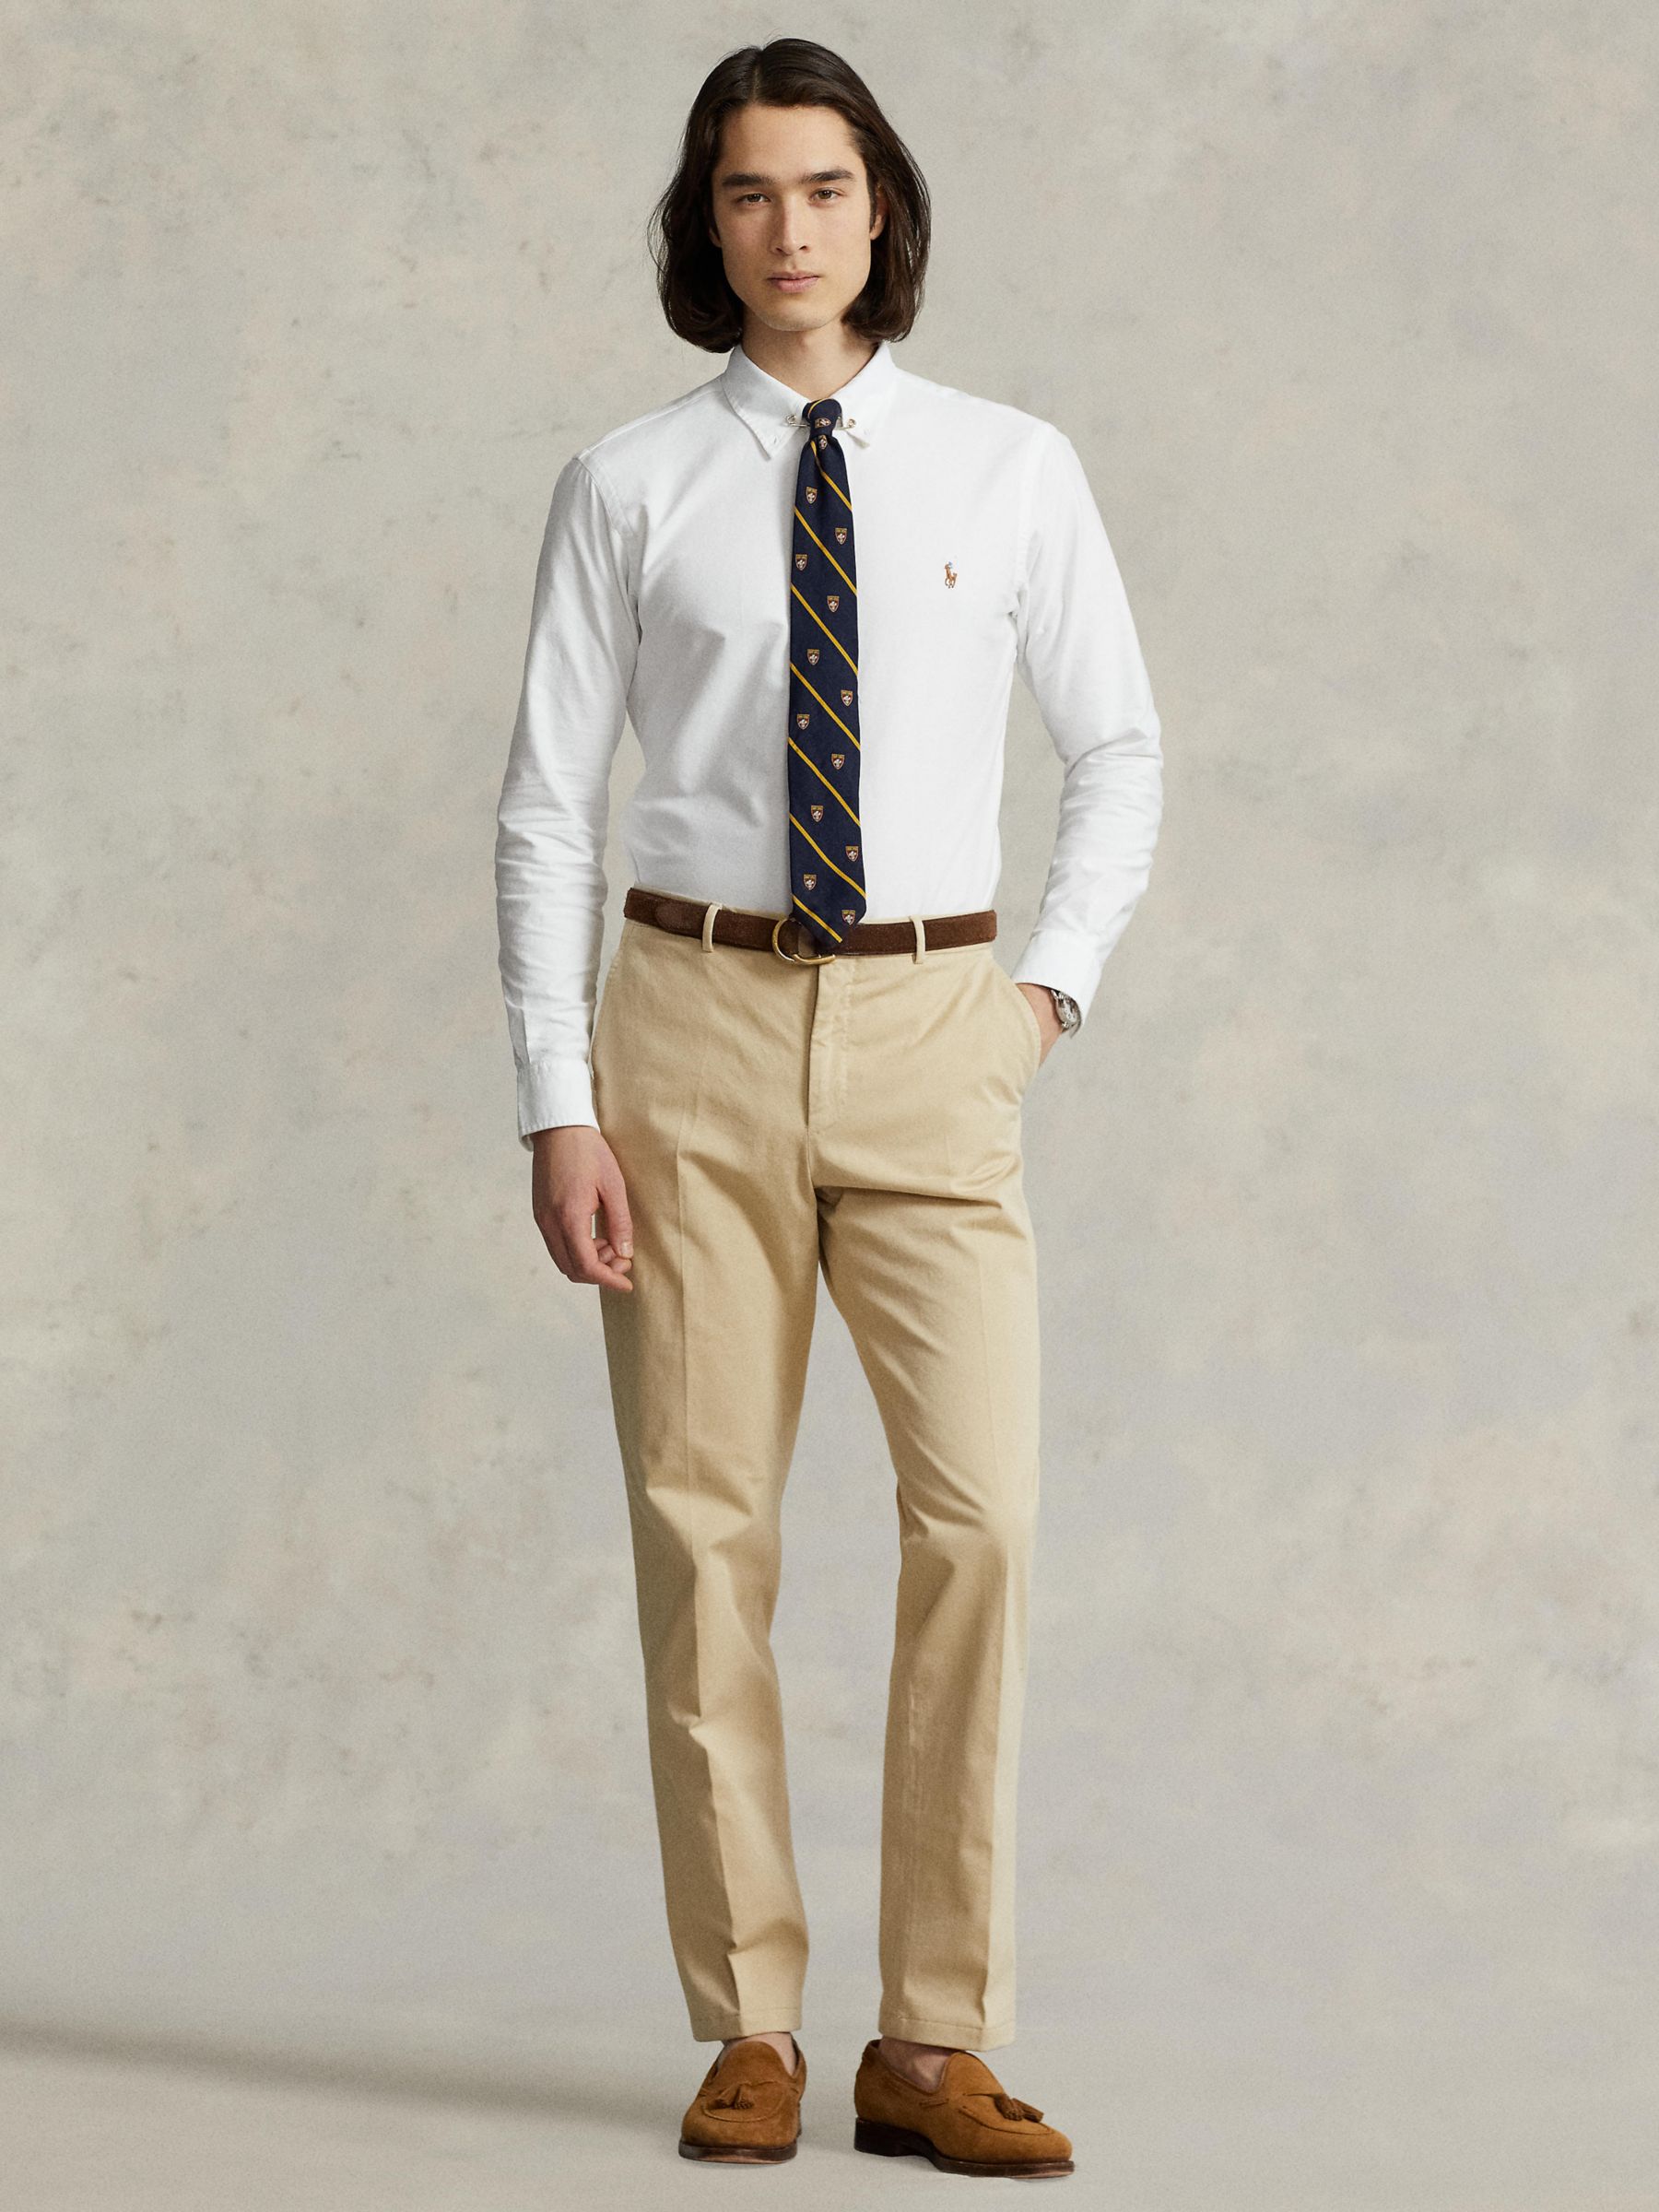 Polo Ralph Lauren Custom Fit Oxford Shirt, White, S